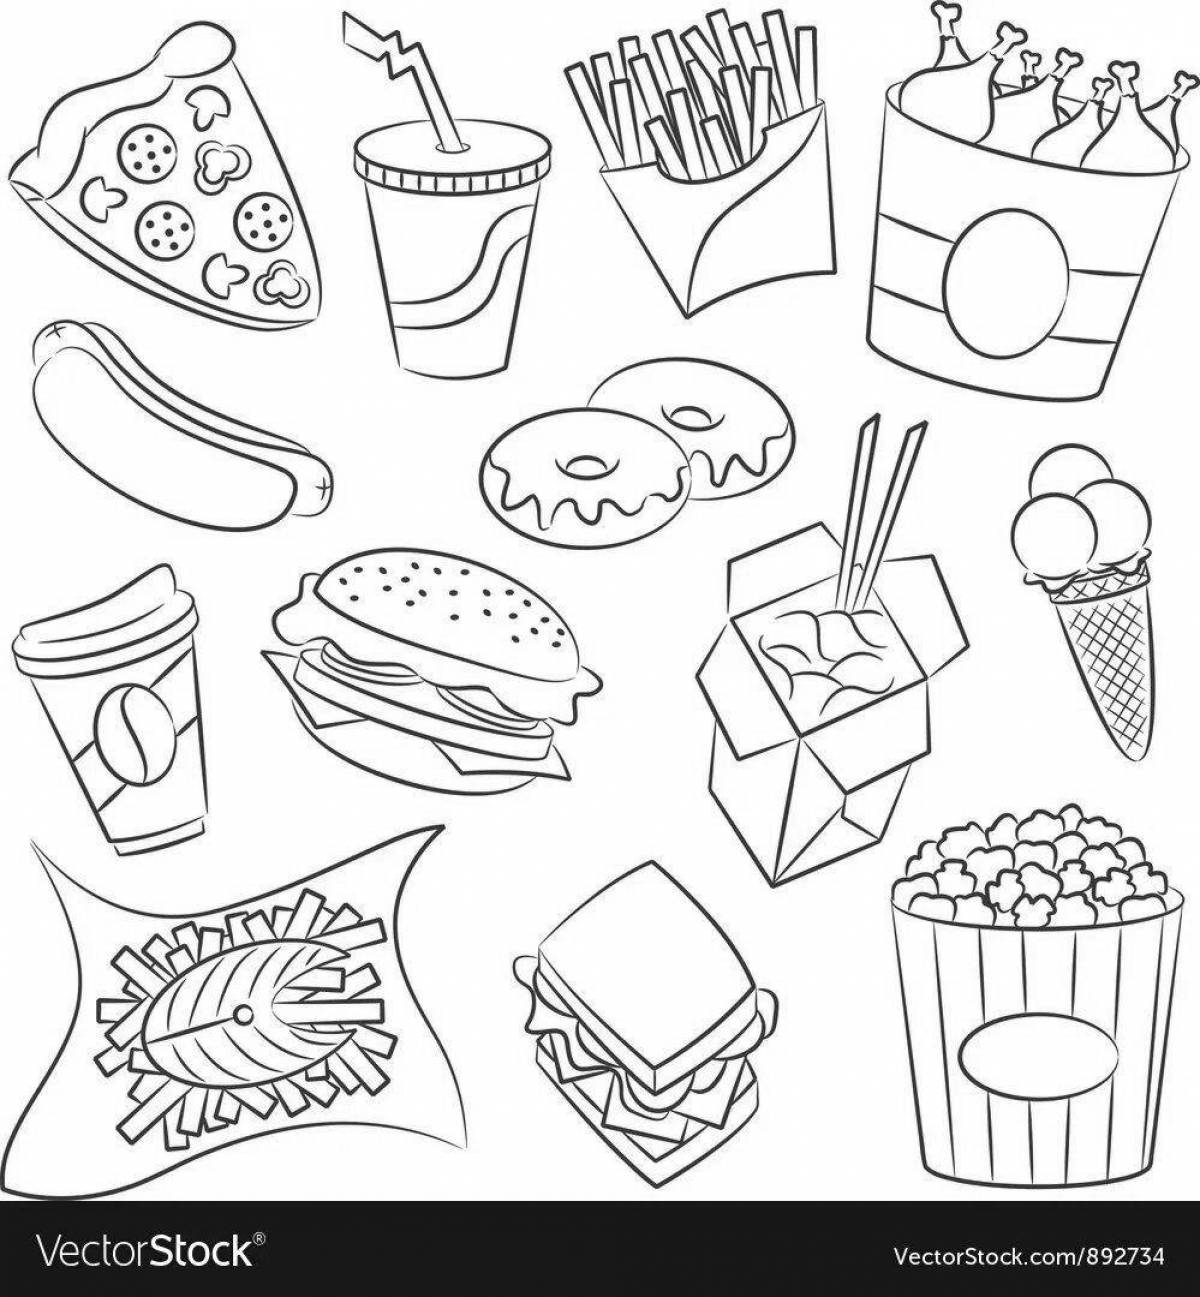 Nice ooty food coloring page